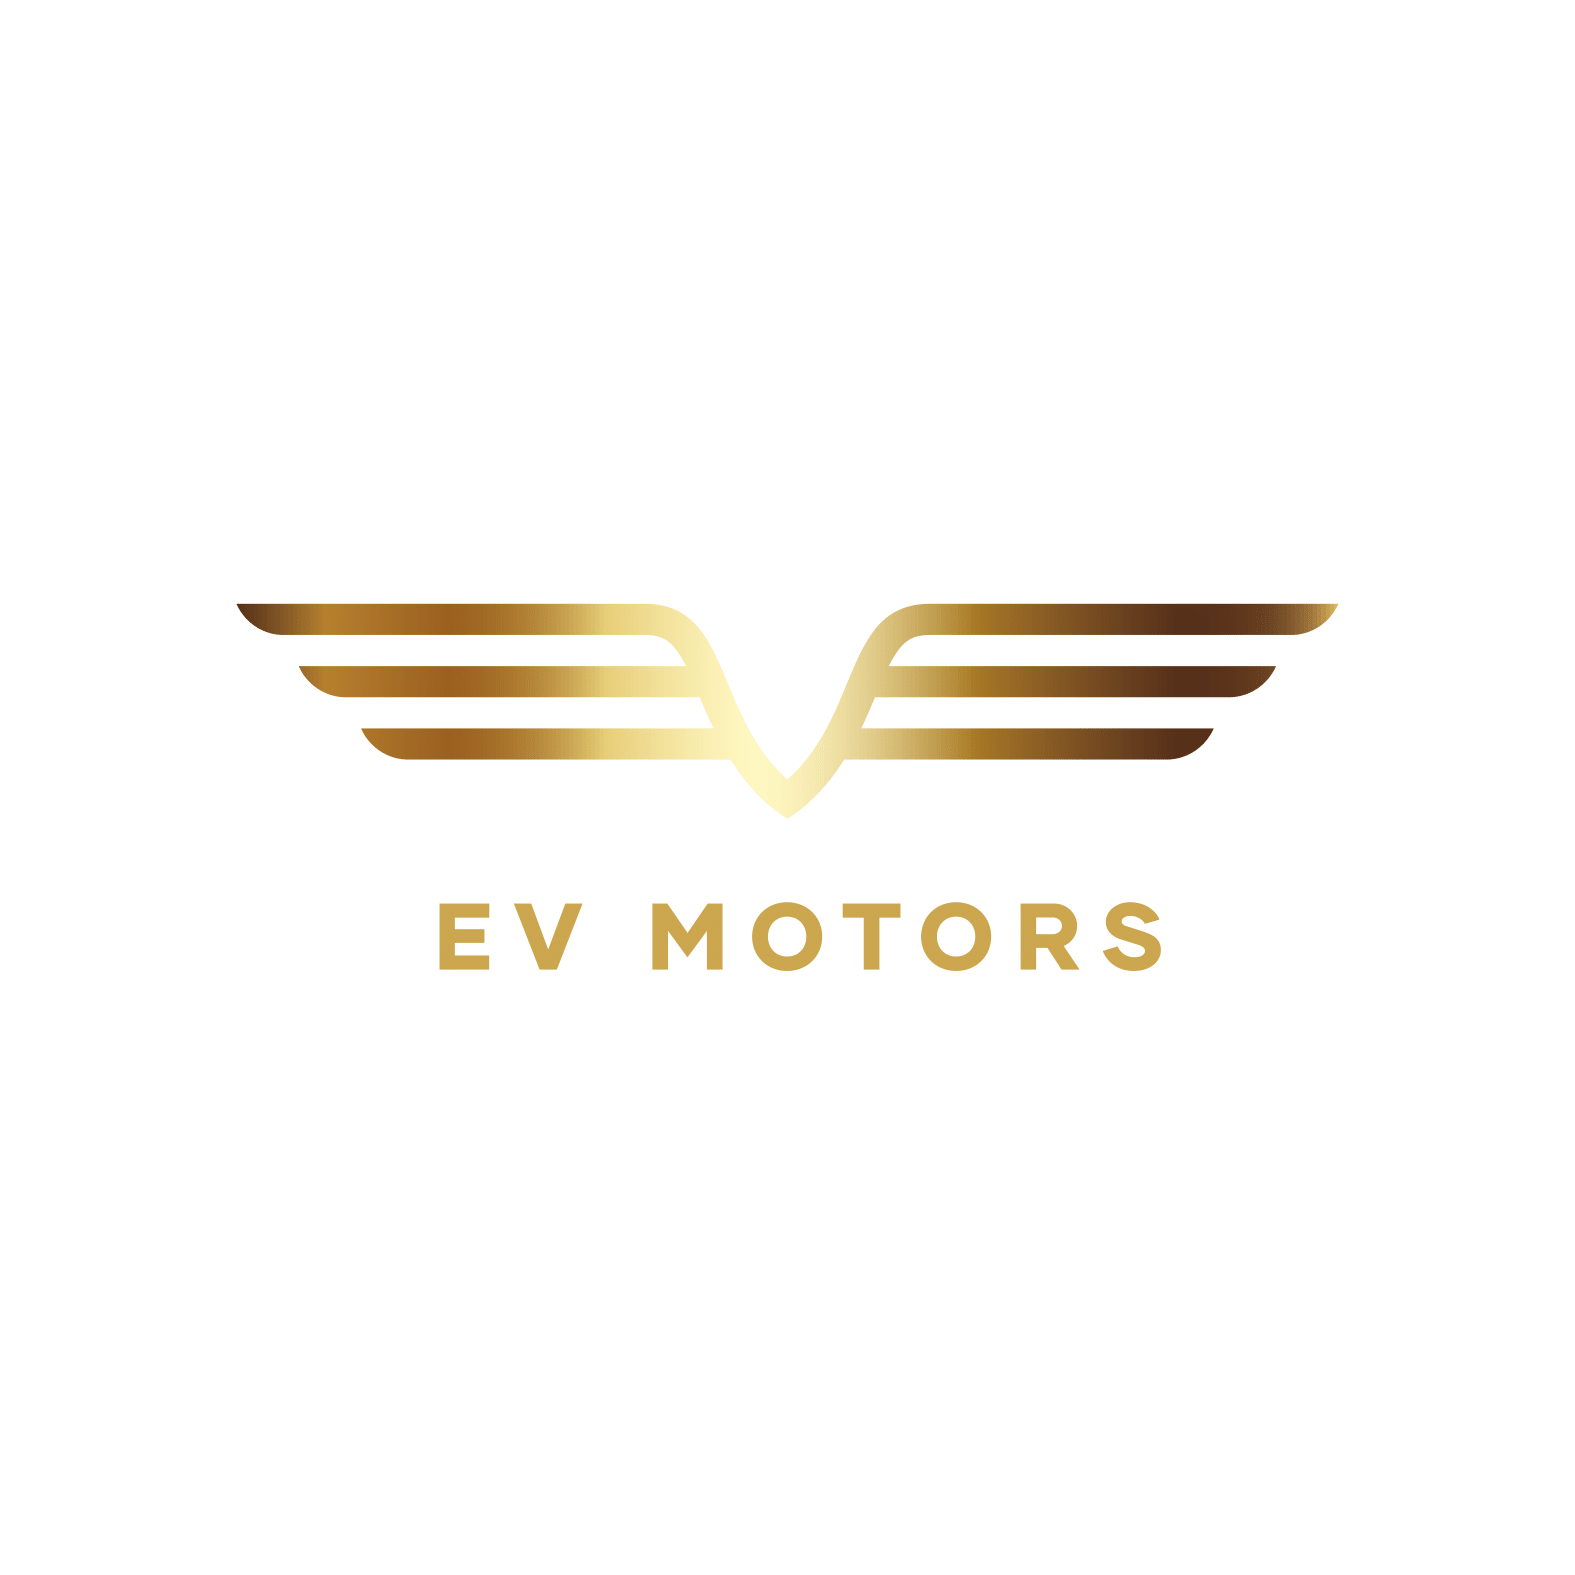 EV MOTORS